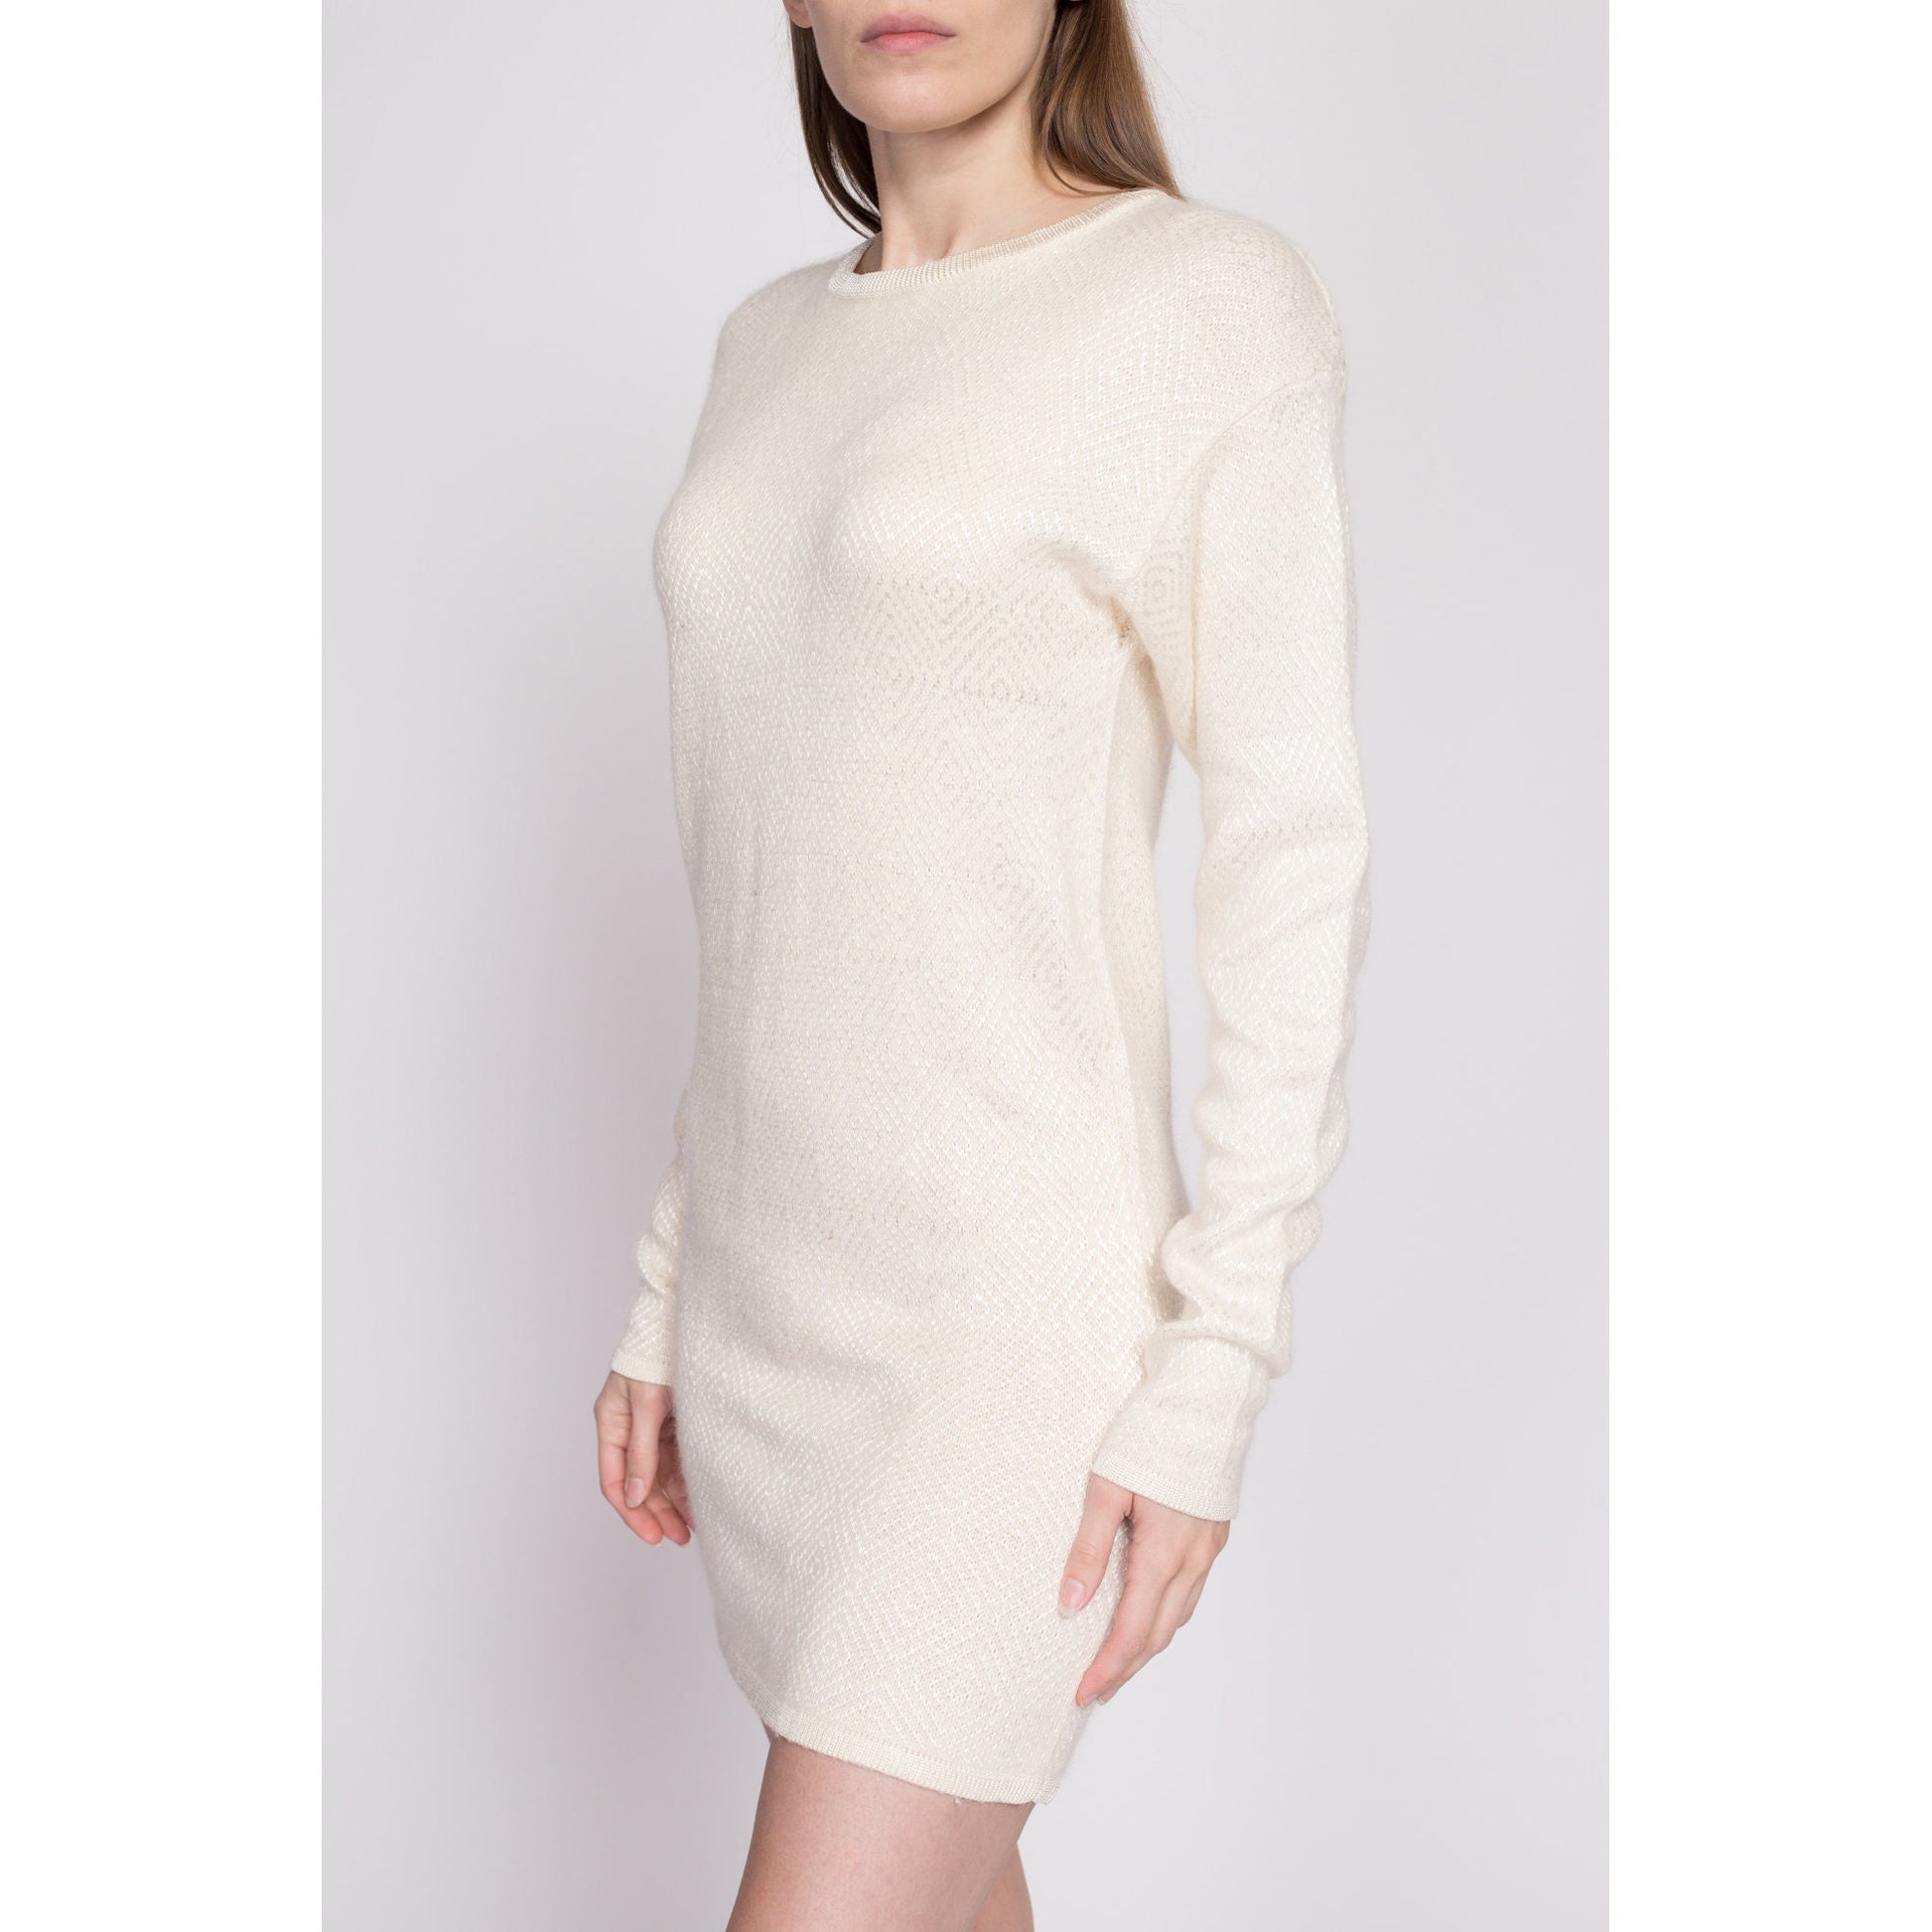 80s Evan Picone Diamond Knit Mini Sweater Dress - Small | Vintage Cream Angora Slouchy Long Sleeve Pullover